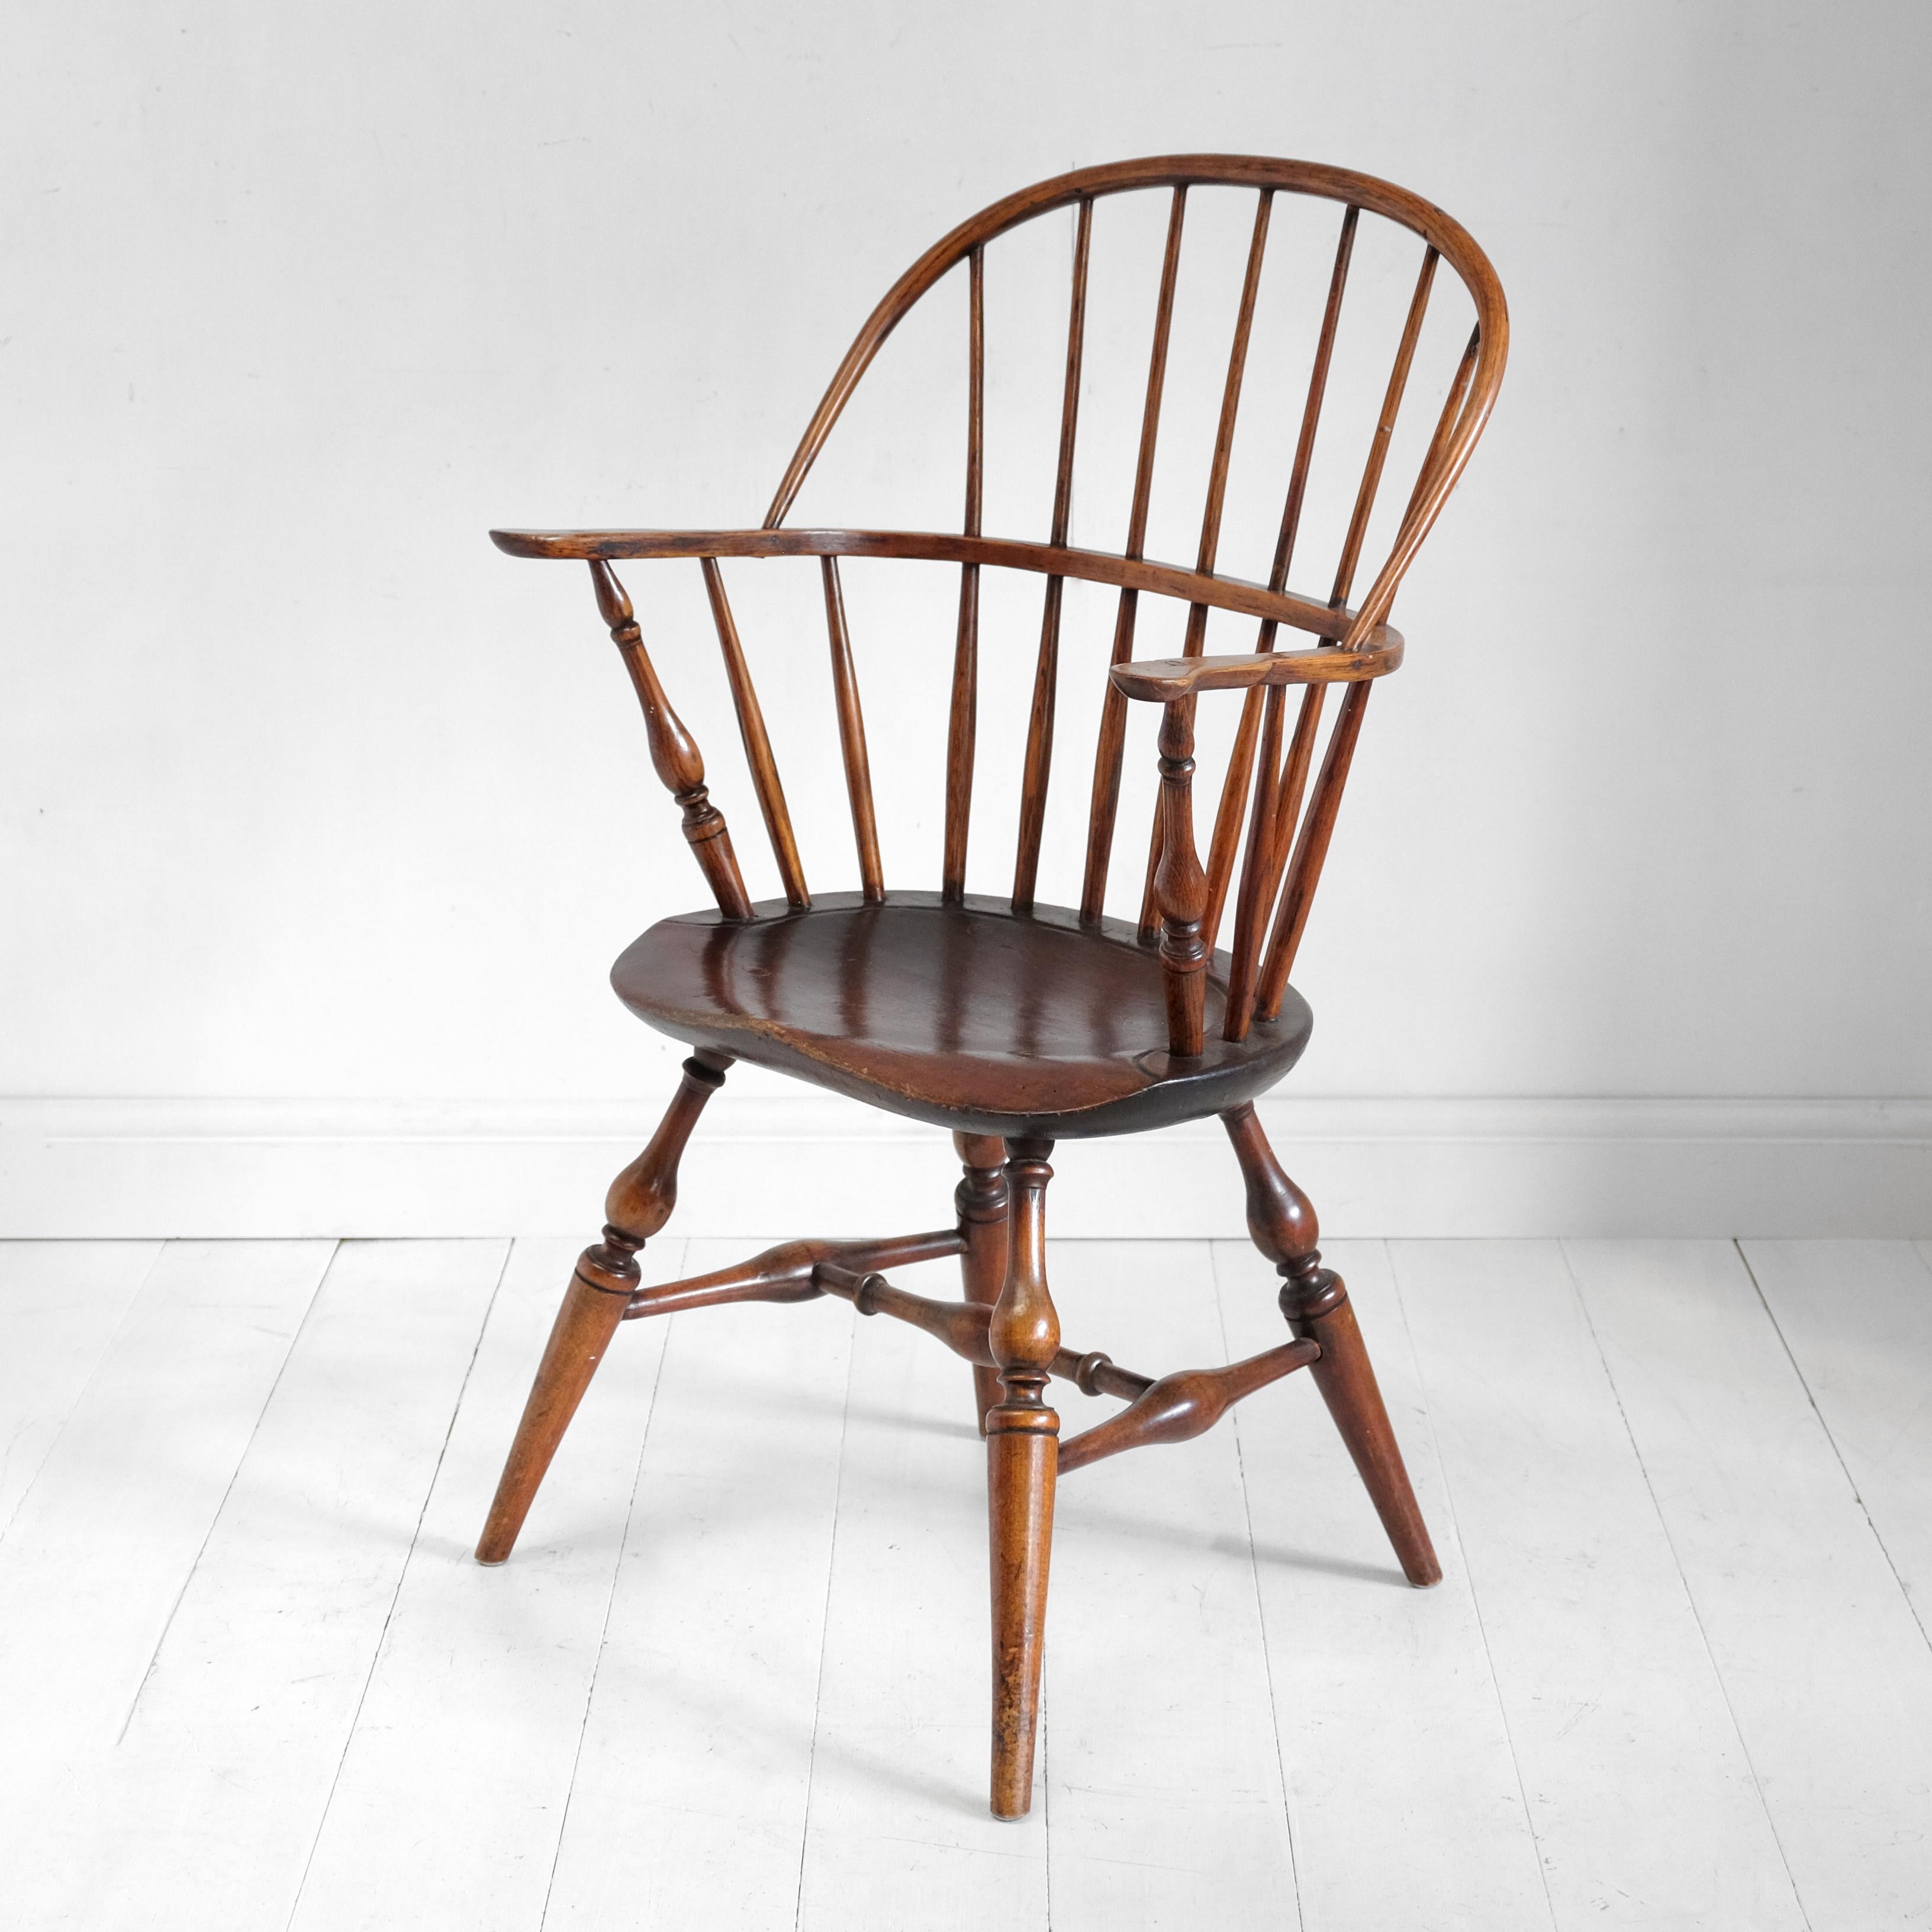 18th century windsor chair